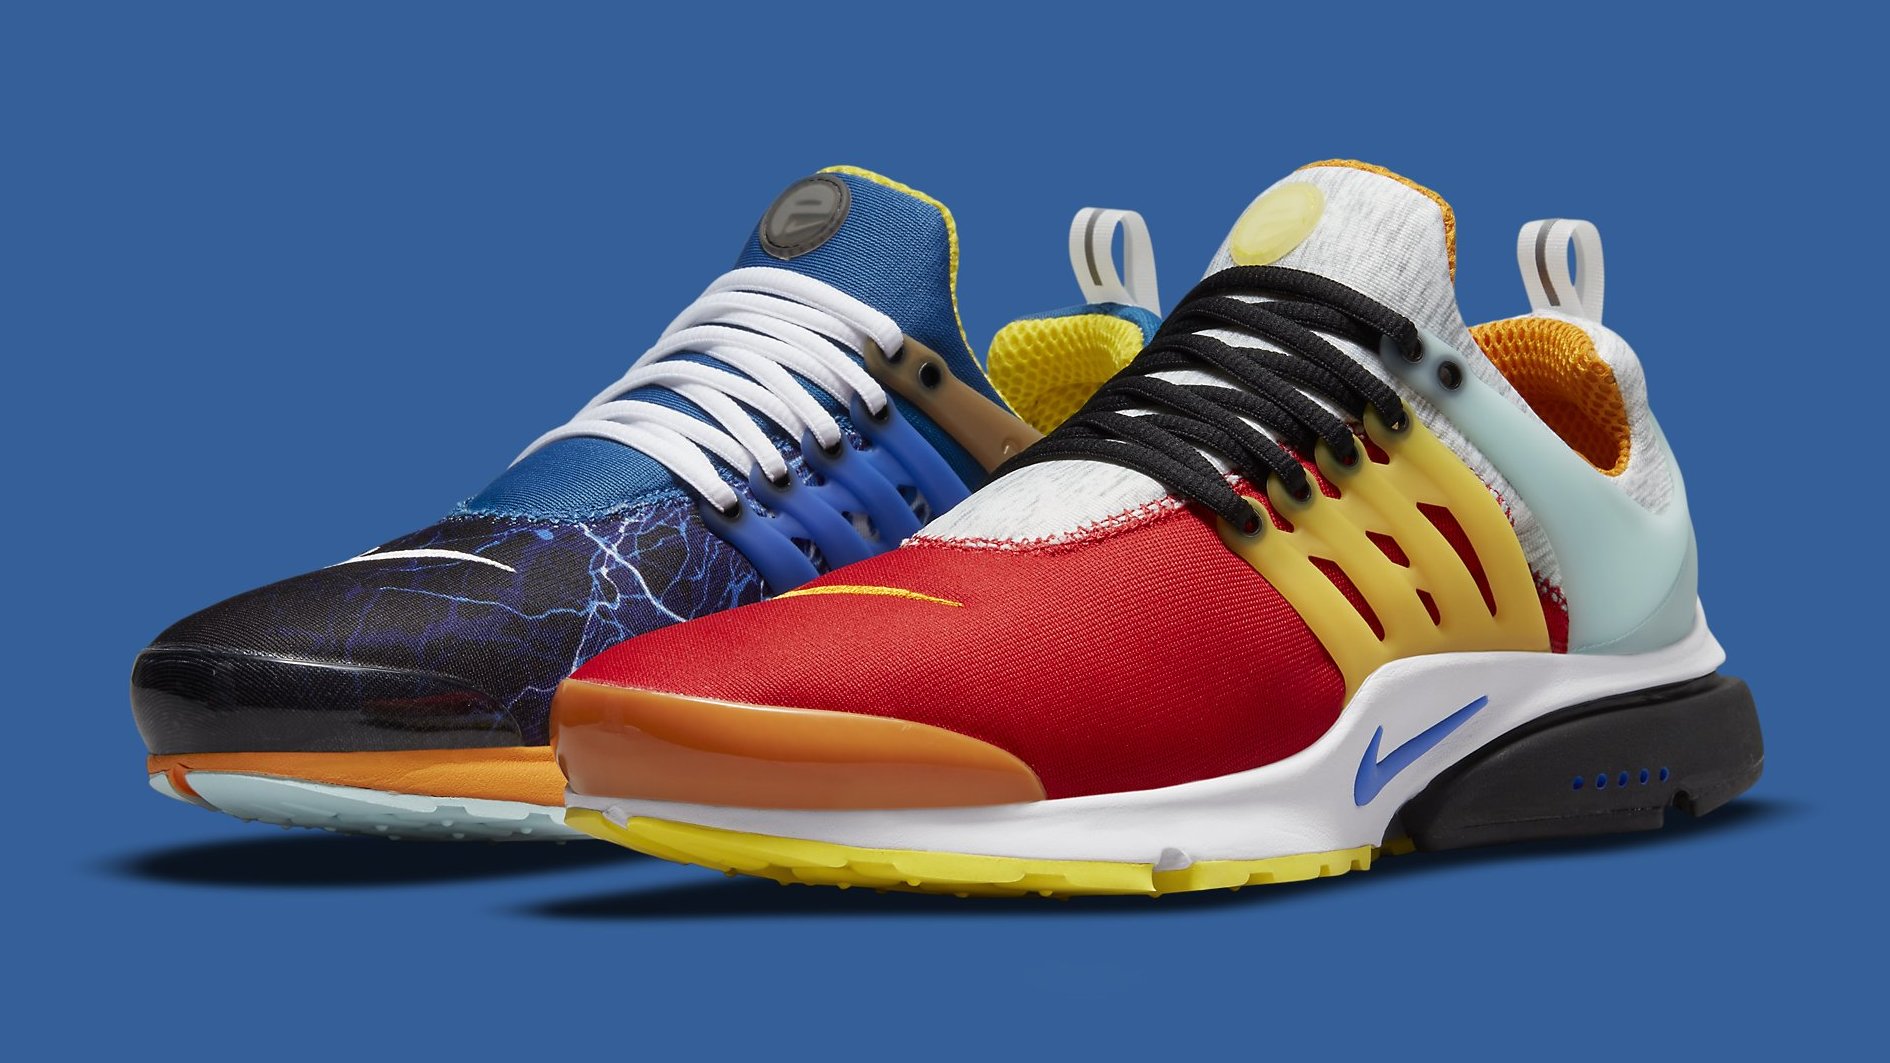 Nike Original Presto Colorways With Upcoming Release |